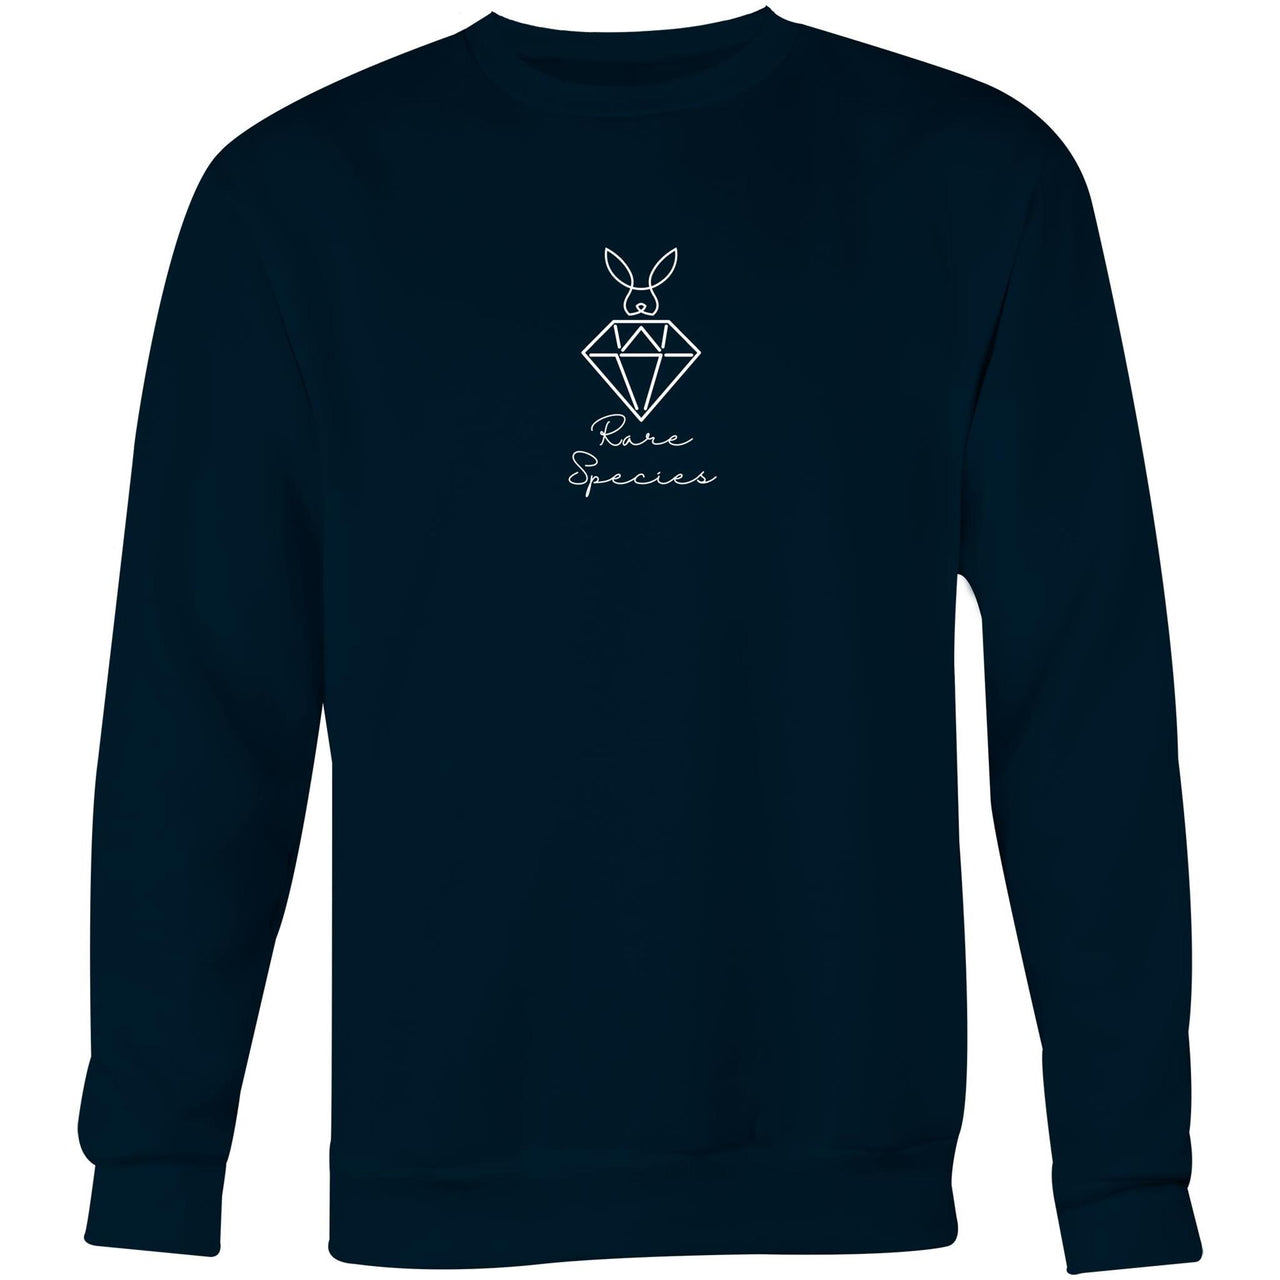 CBF Rare Species Crew Sweatshirt navy by CBF Clothing